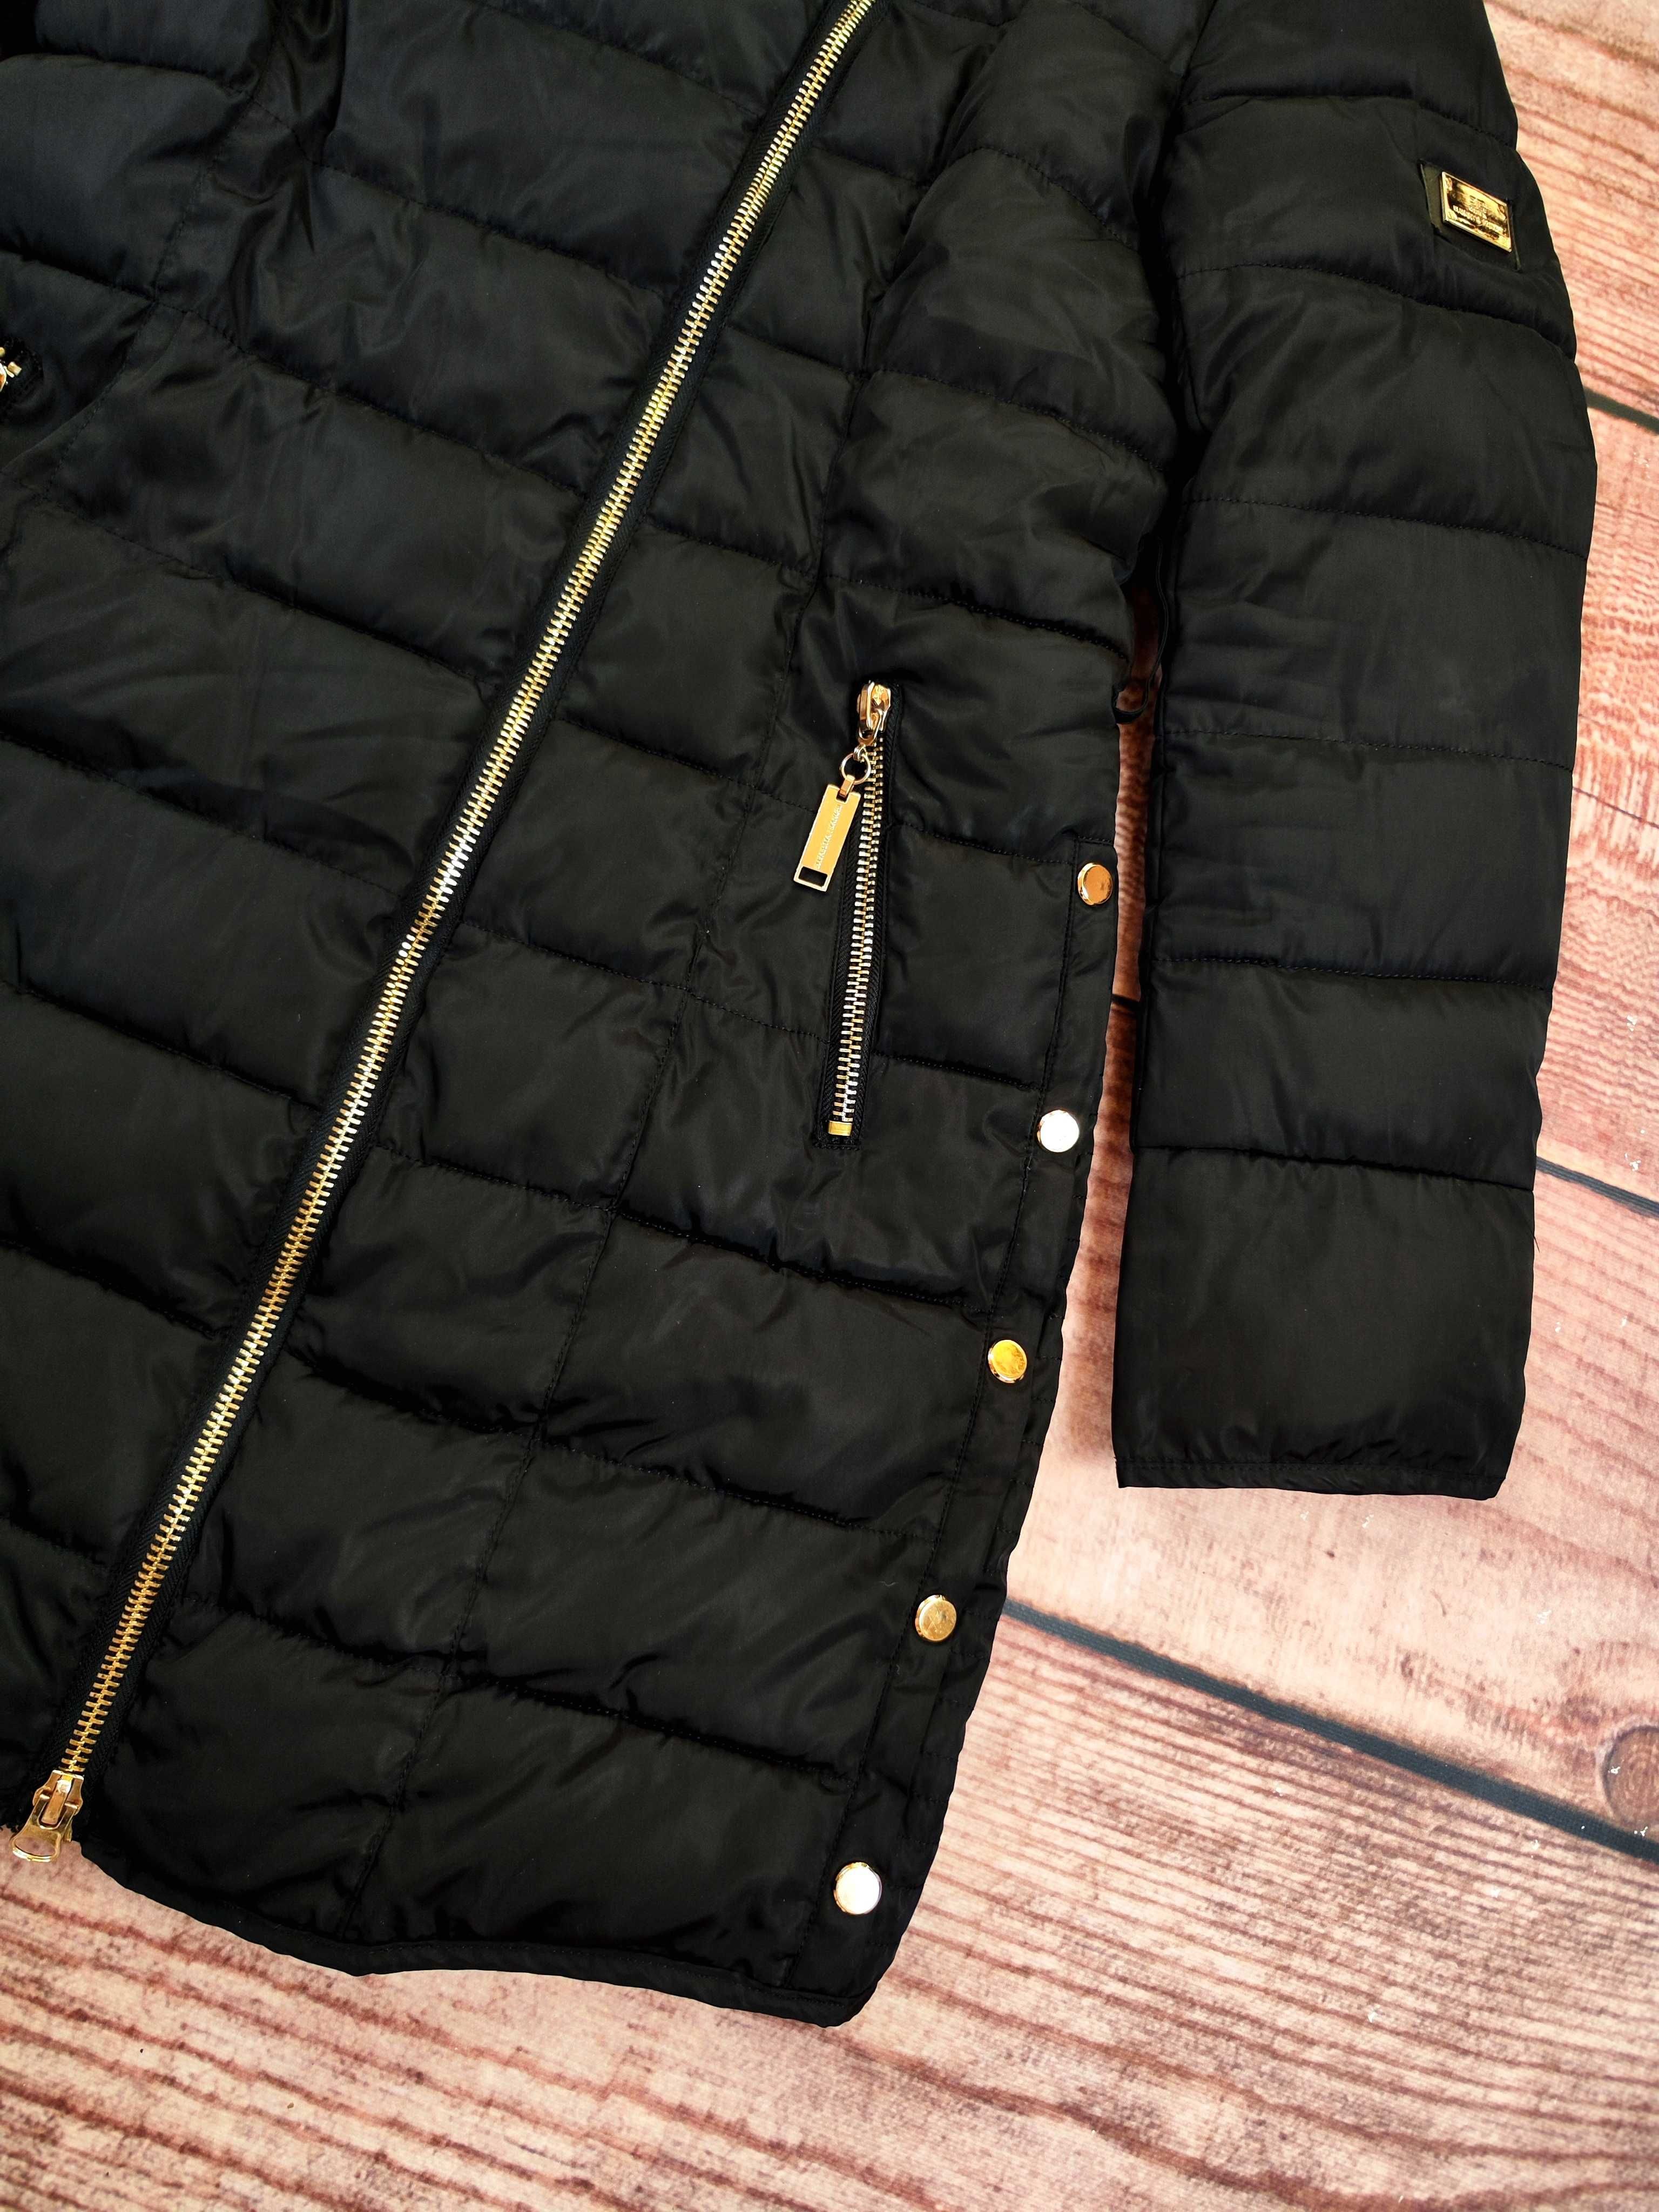 Kurtka zimowa Elisabetta Franchi Icy Jacket puchowa parka r. L/XL